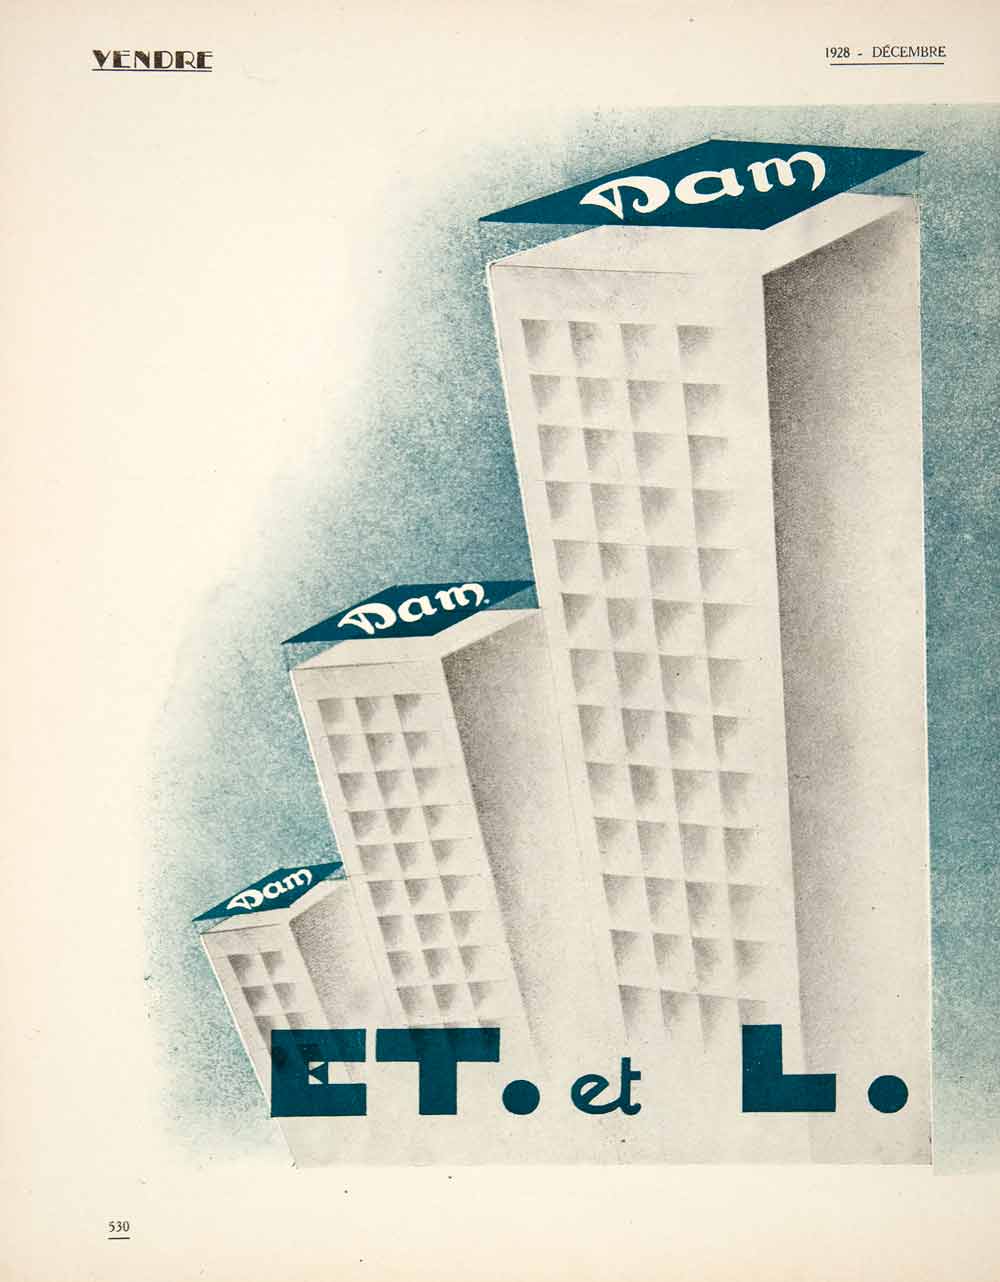 1928 Ad Art Deco Damour French Advertising Agency 20 Rue Vernier Paris VEN5